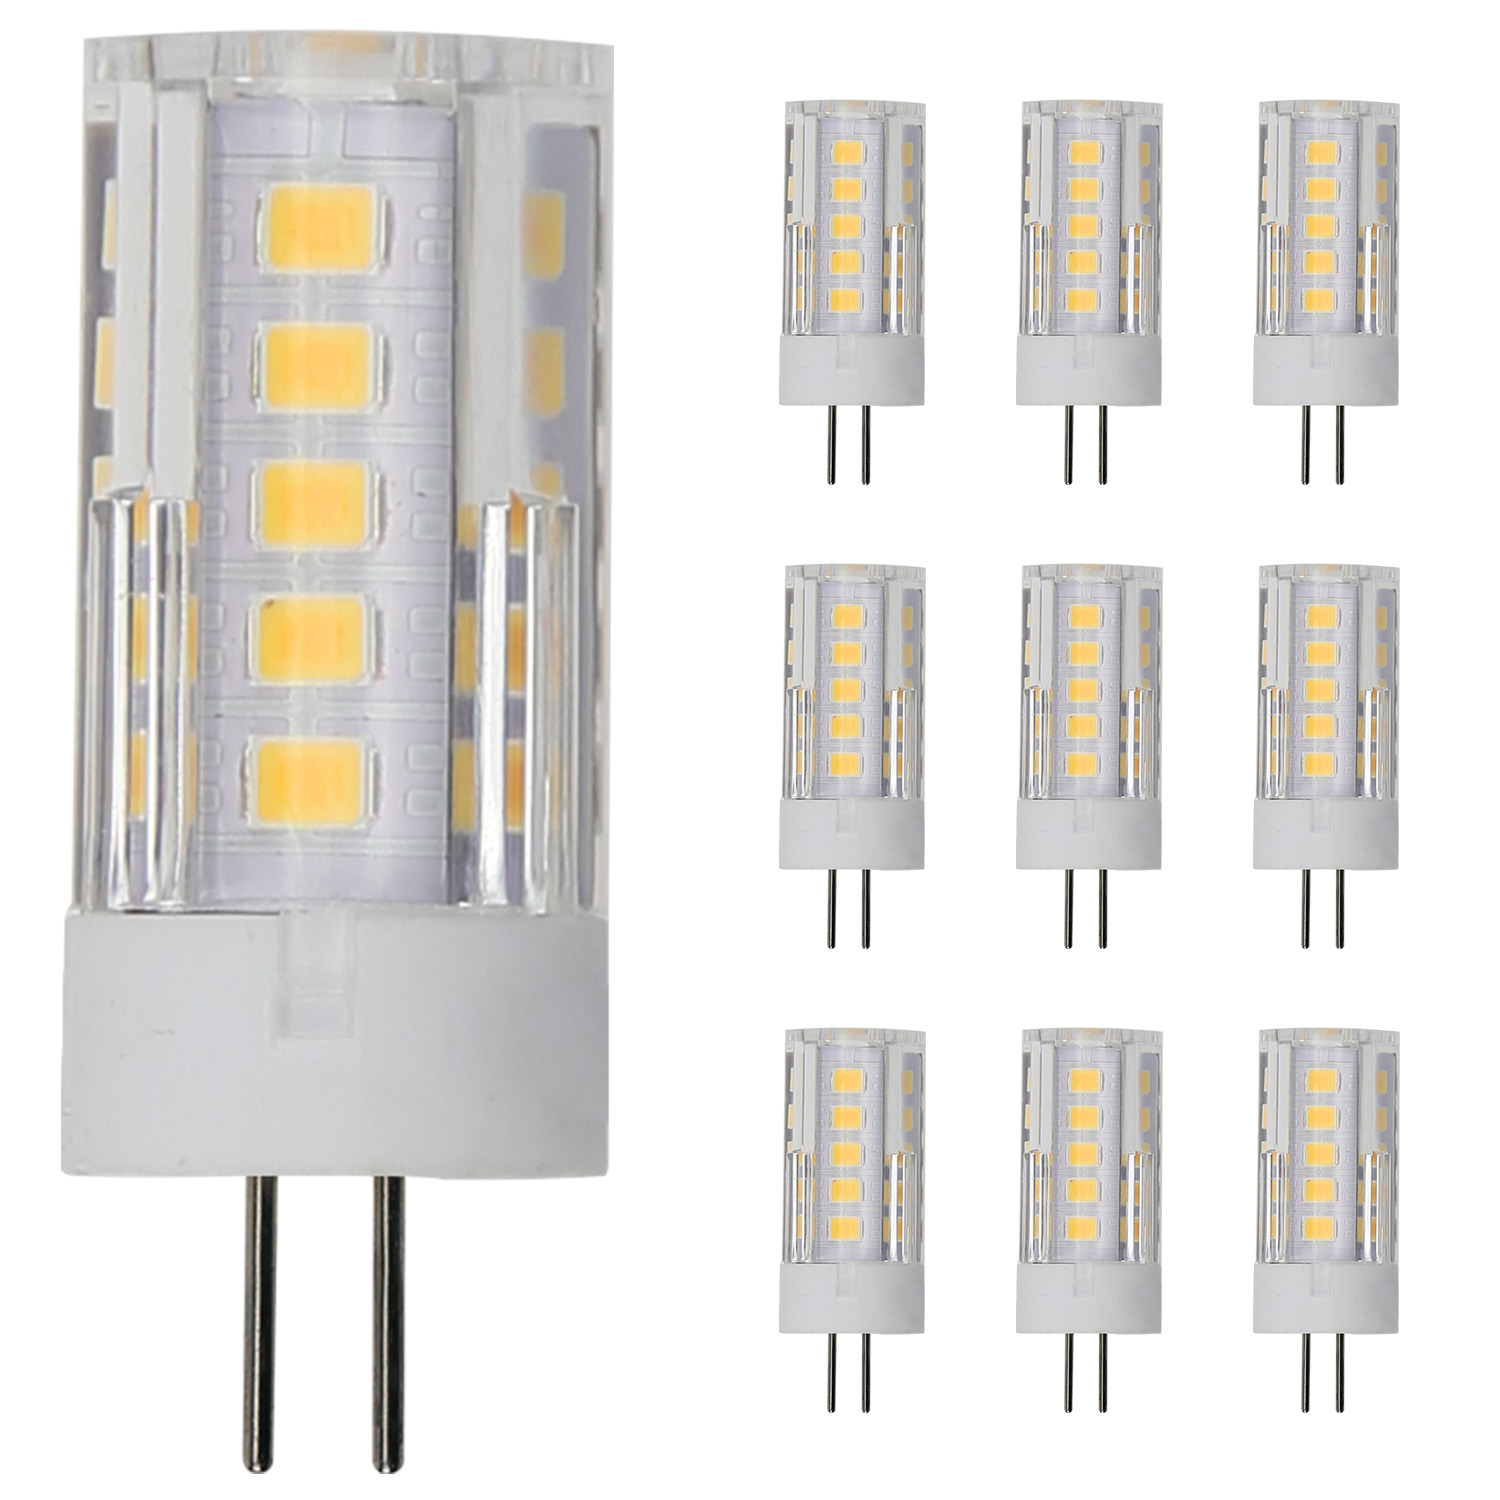 Lumina G4 LED Bulb – 3W Bi-Pin LED Light Bulb Landscape Lighting Bulb, Non-dimmable, Shatterproof, Dustproof – AC/DC 12 Volt, 3000K Warm White, 260 Lumens – 25W Halogen Bulb Equivalent (10 Pack)